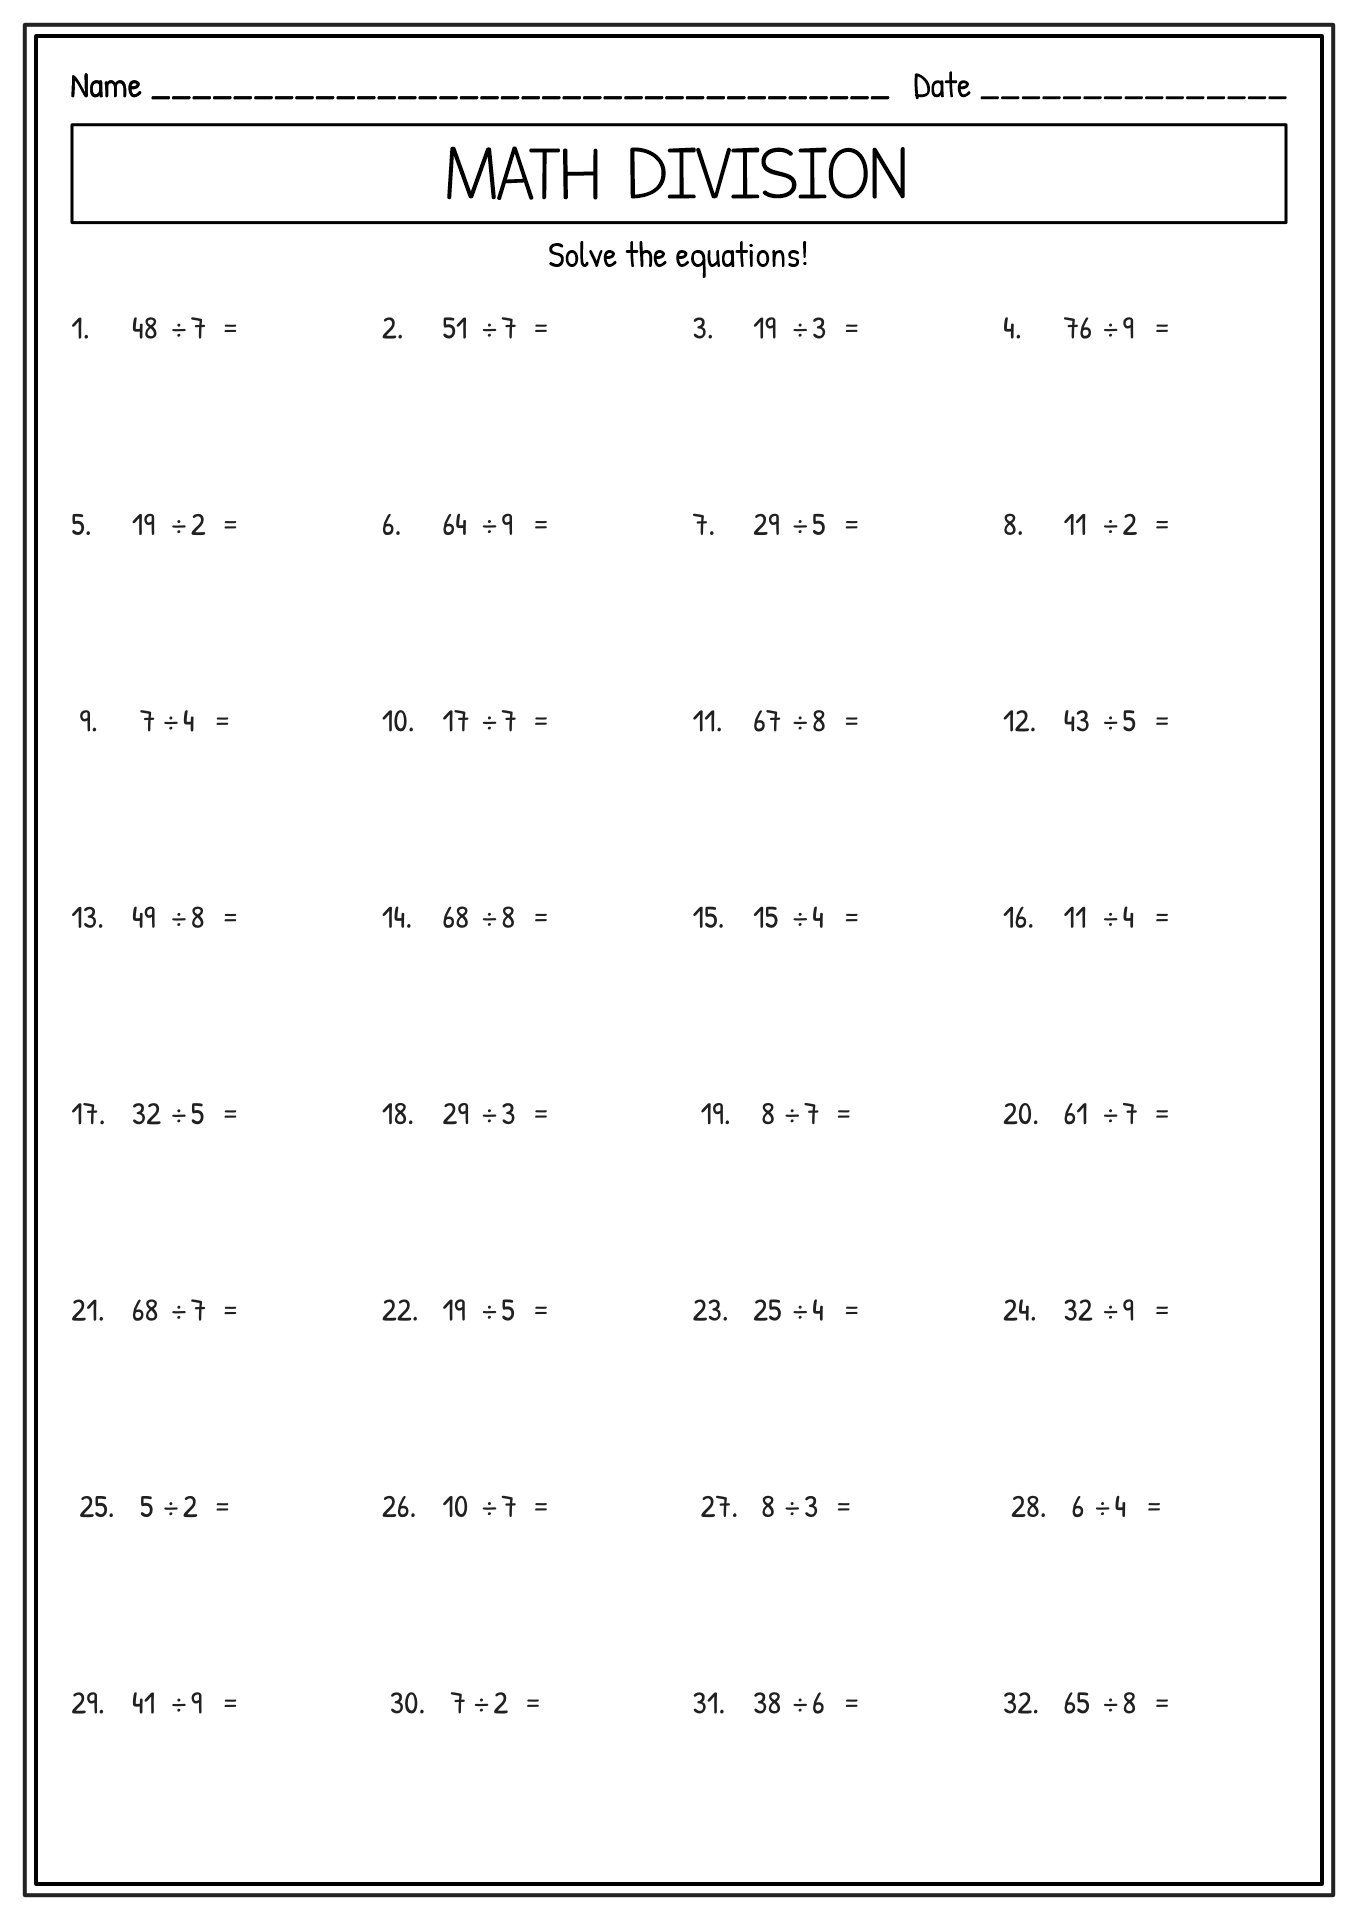 Minute Math Division Worksheets Image